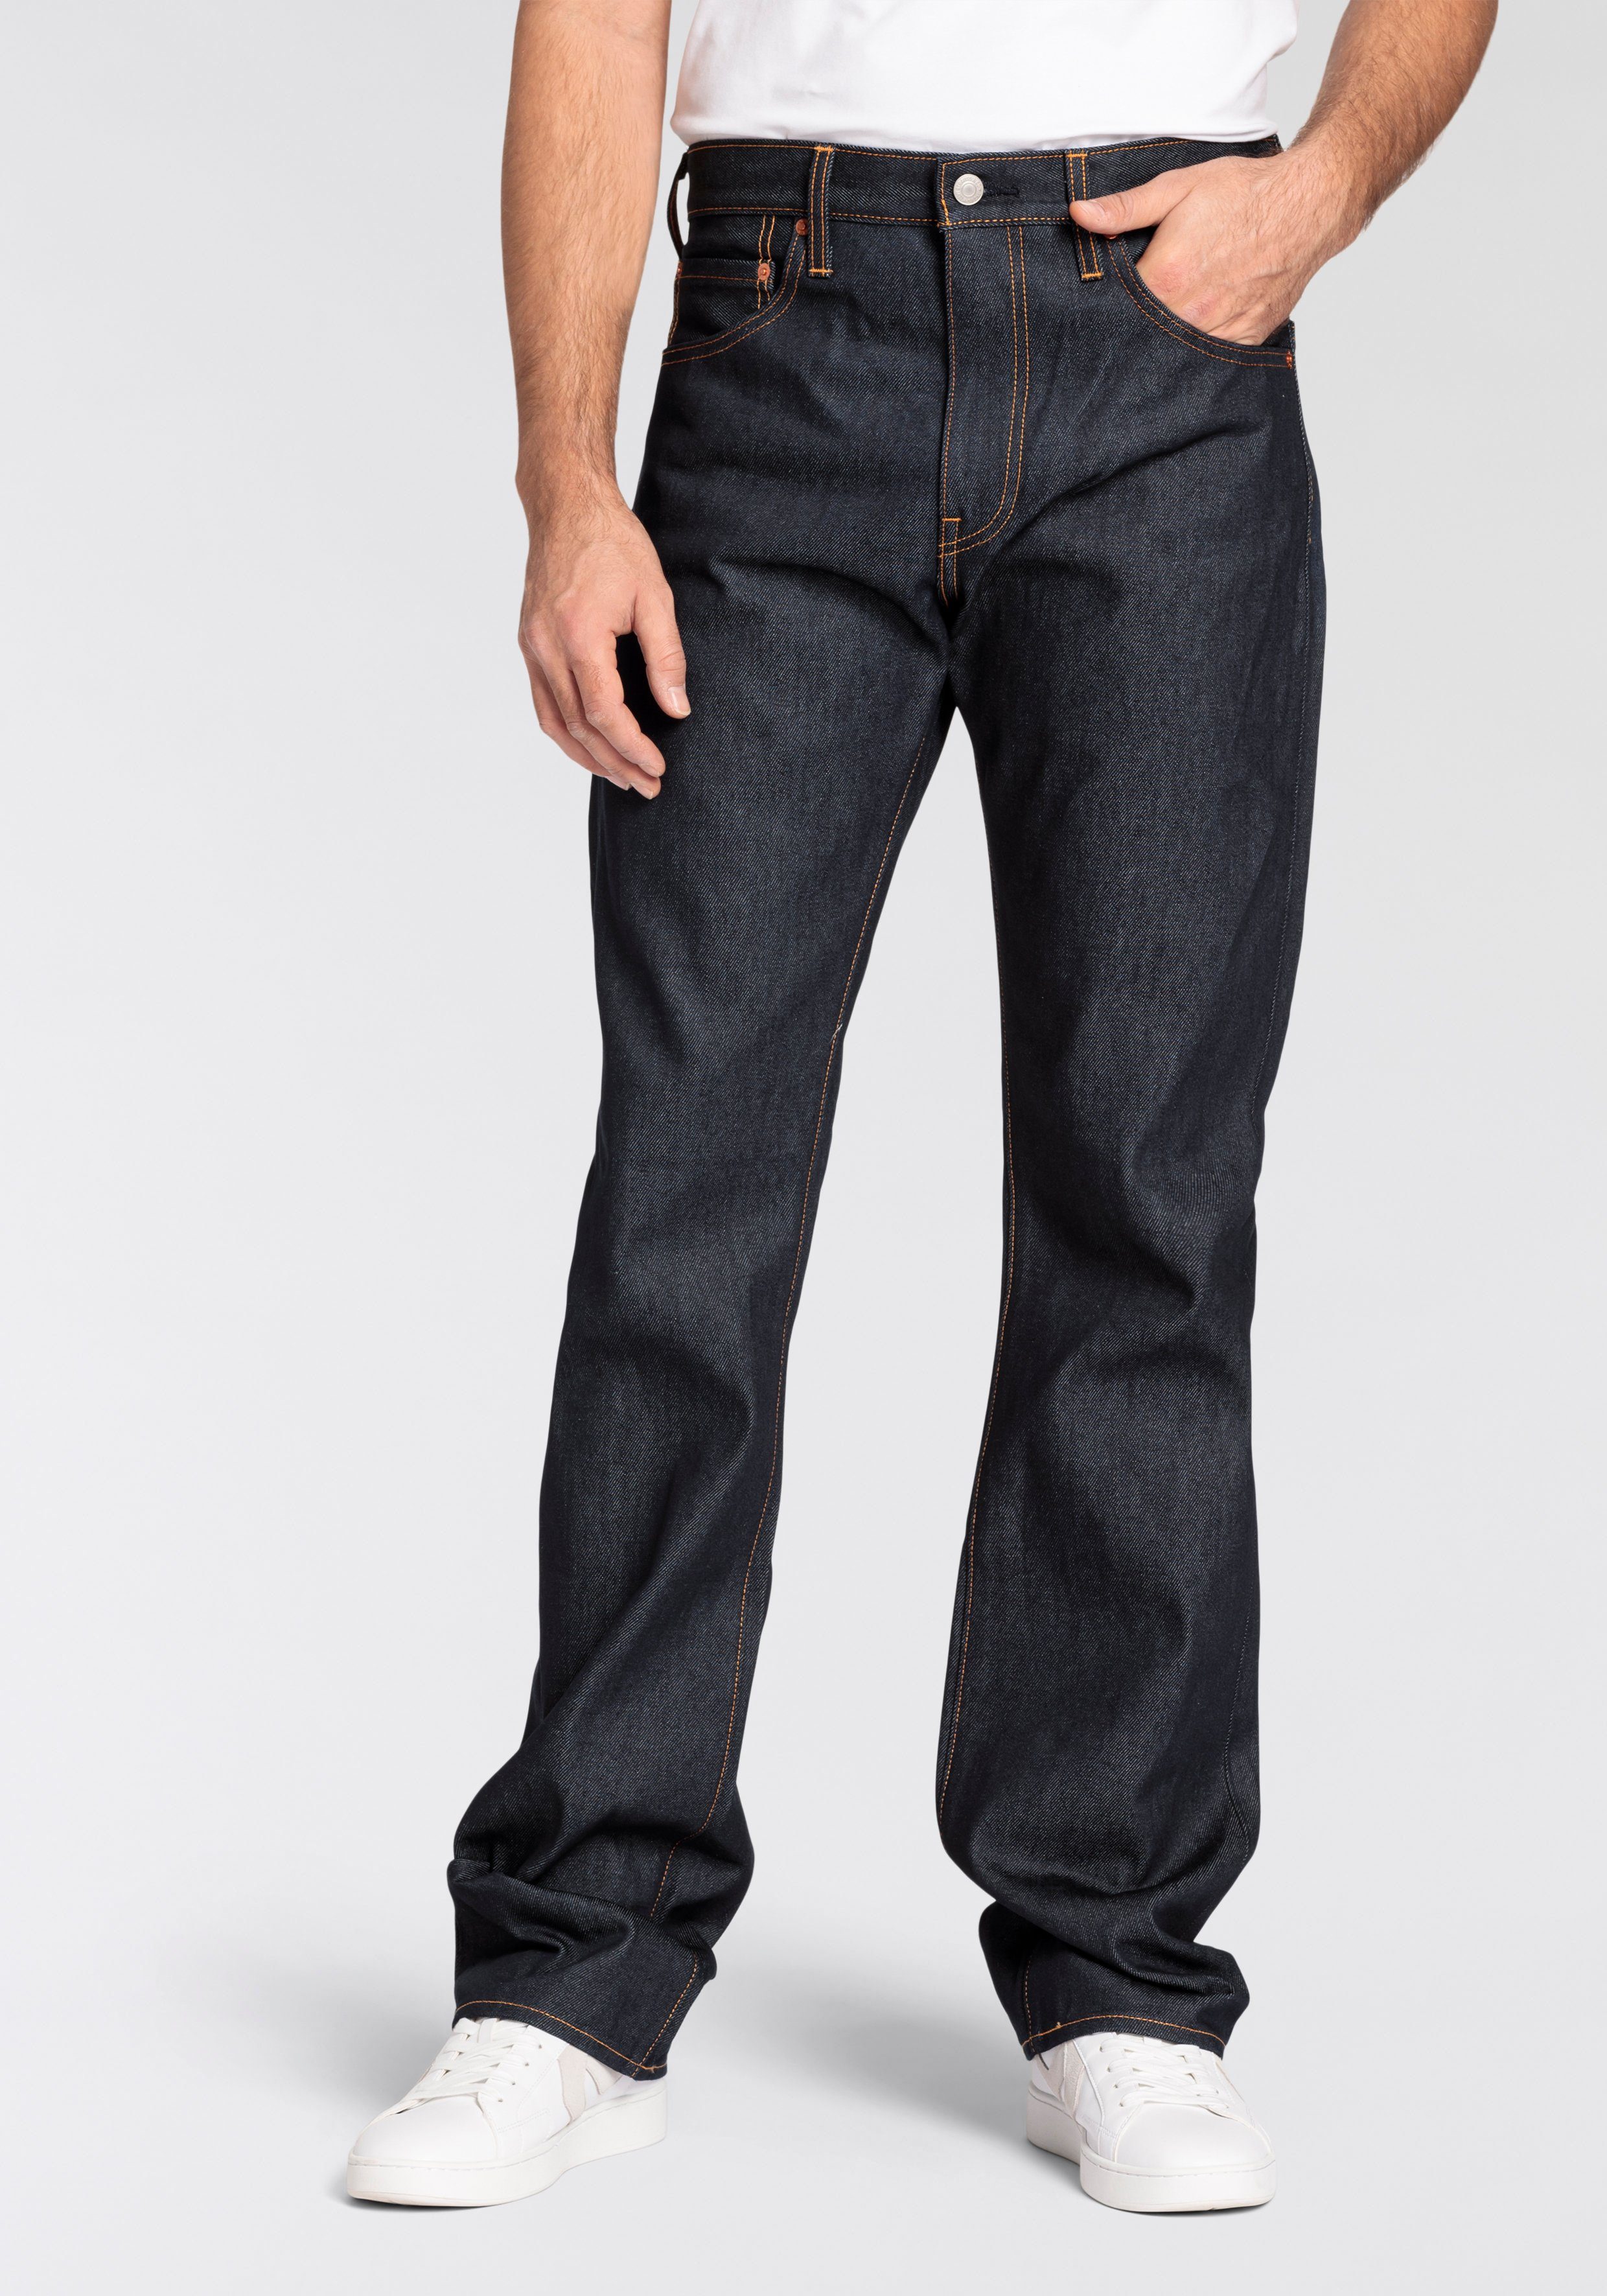 Levi's Bootcut jeans LV Jeans 517 BOOTCUT